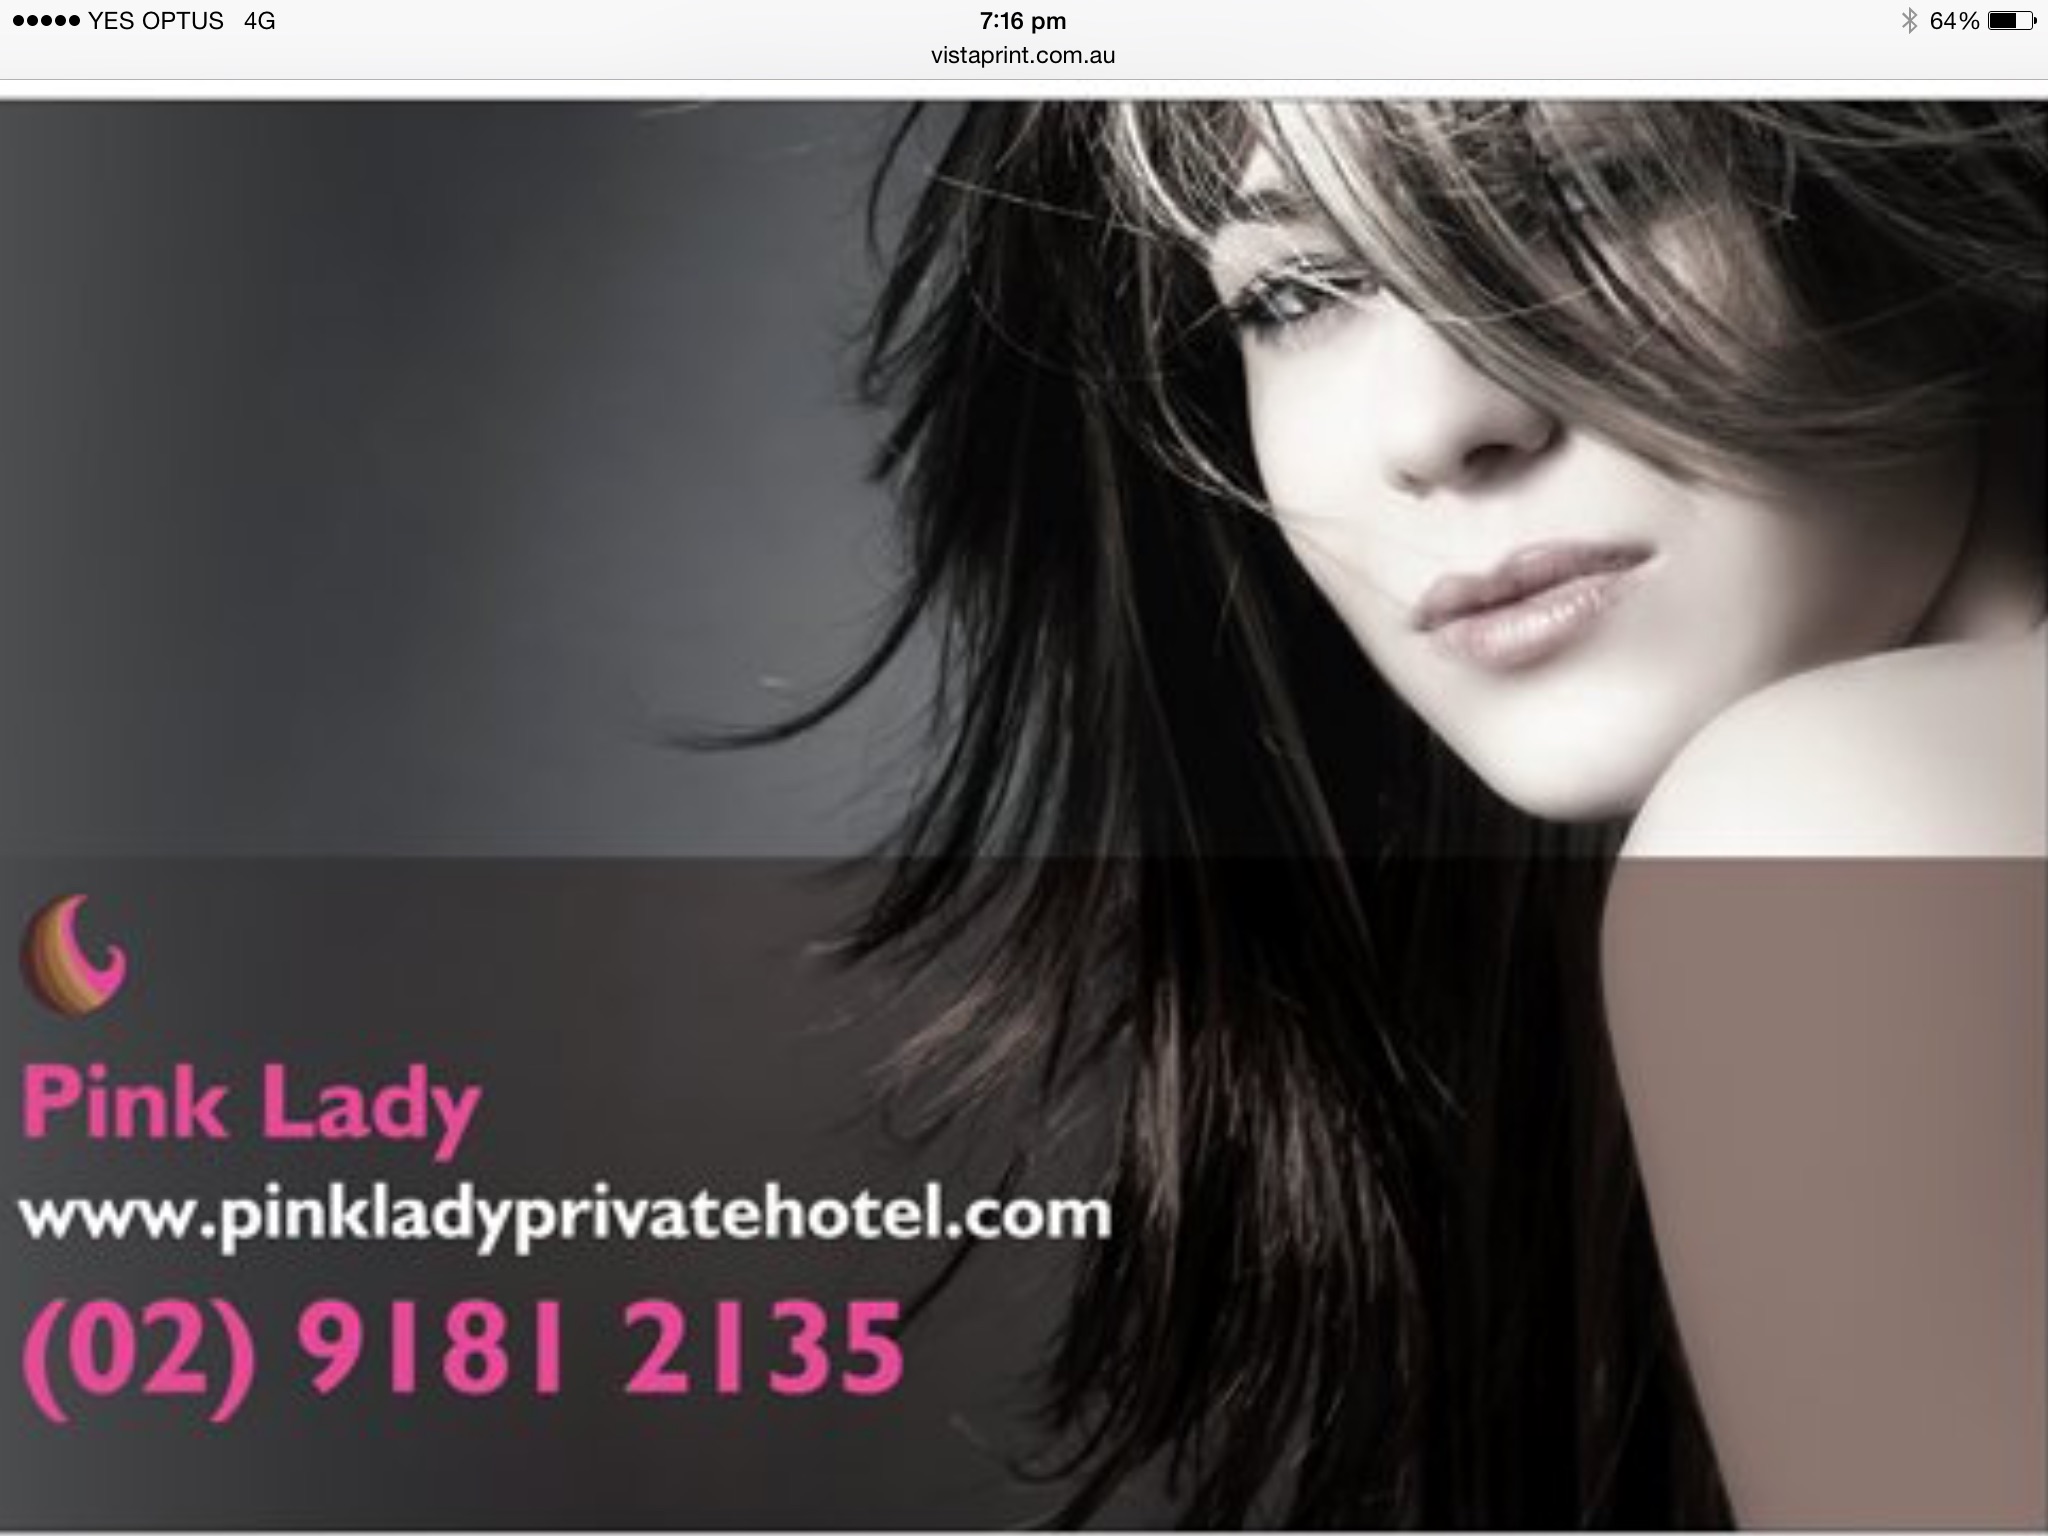 Pink Lady Private Hotel - Nambucca Heads Accommodation